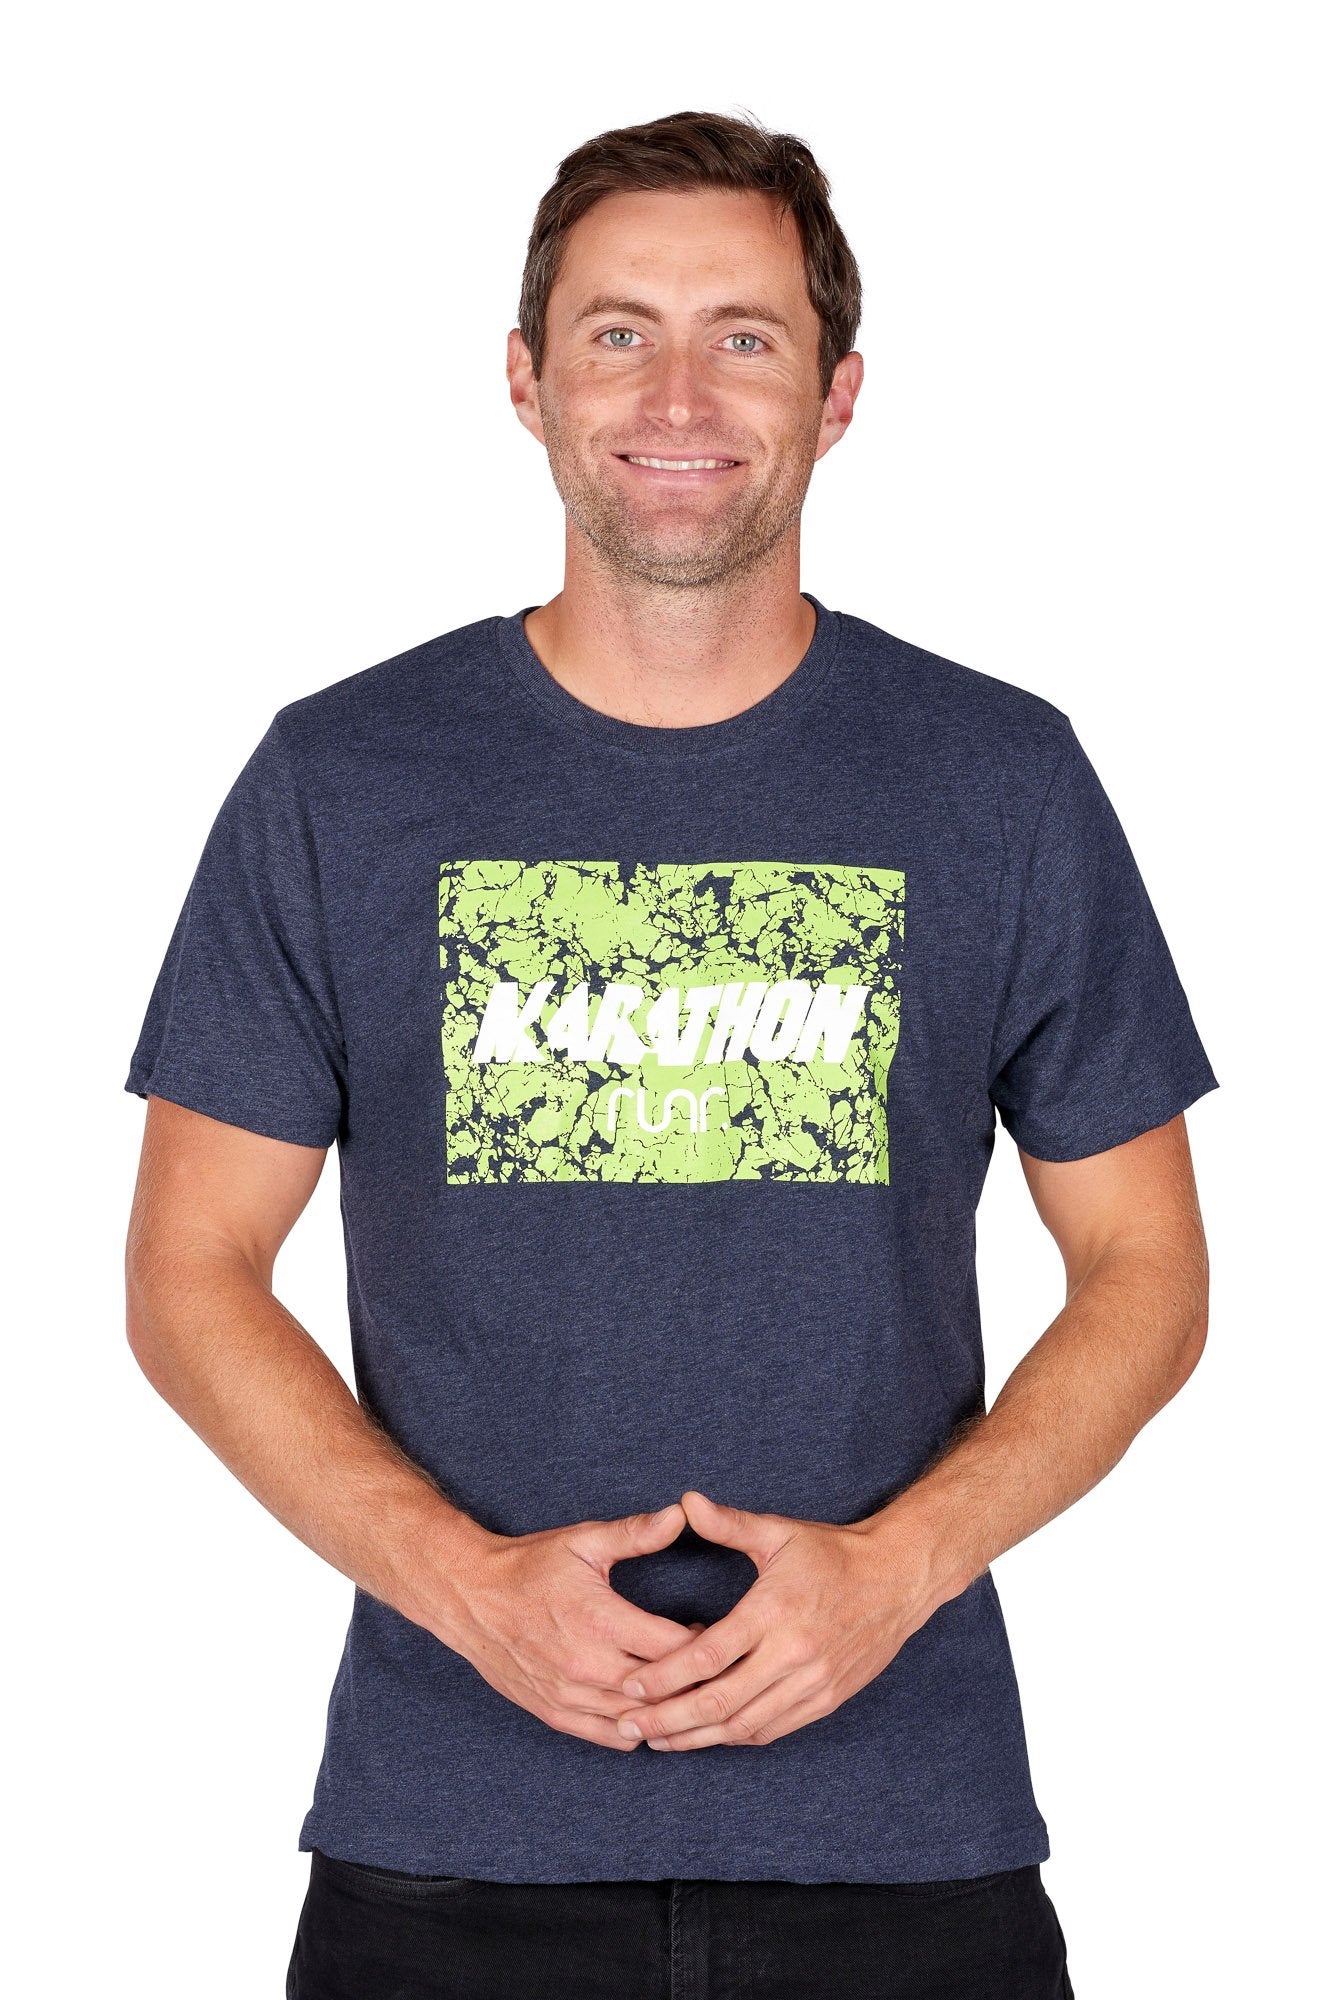 Men's Marathon Runr T-Shirts - Navy/Green